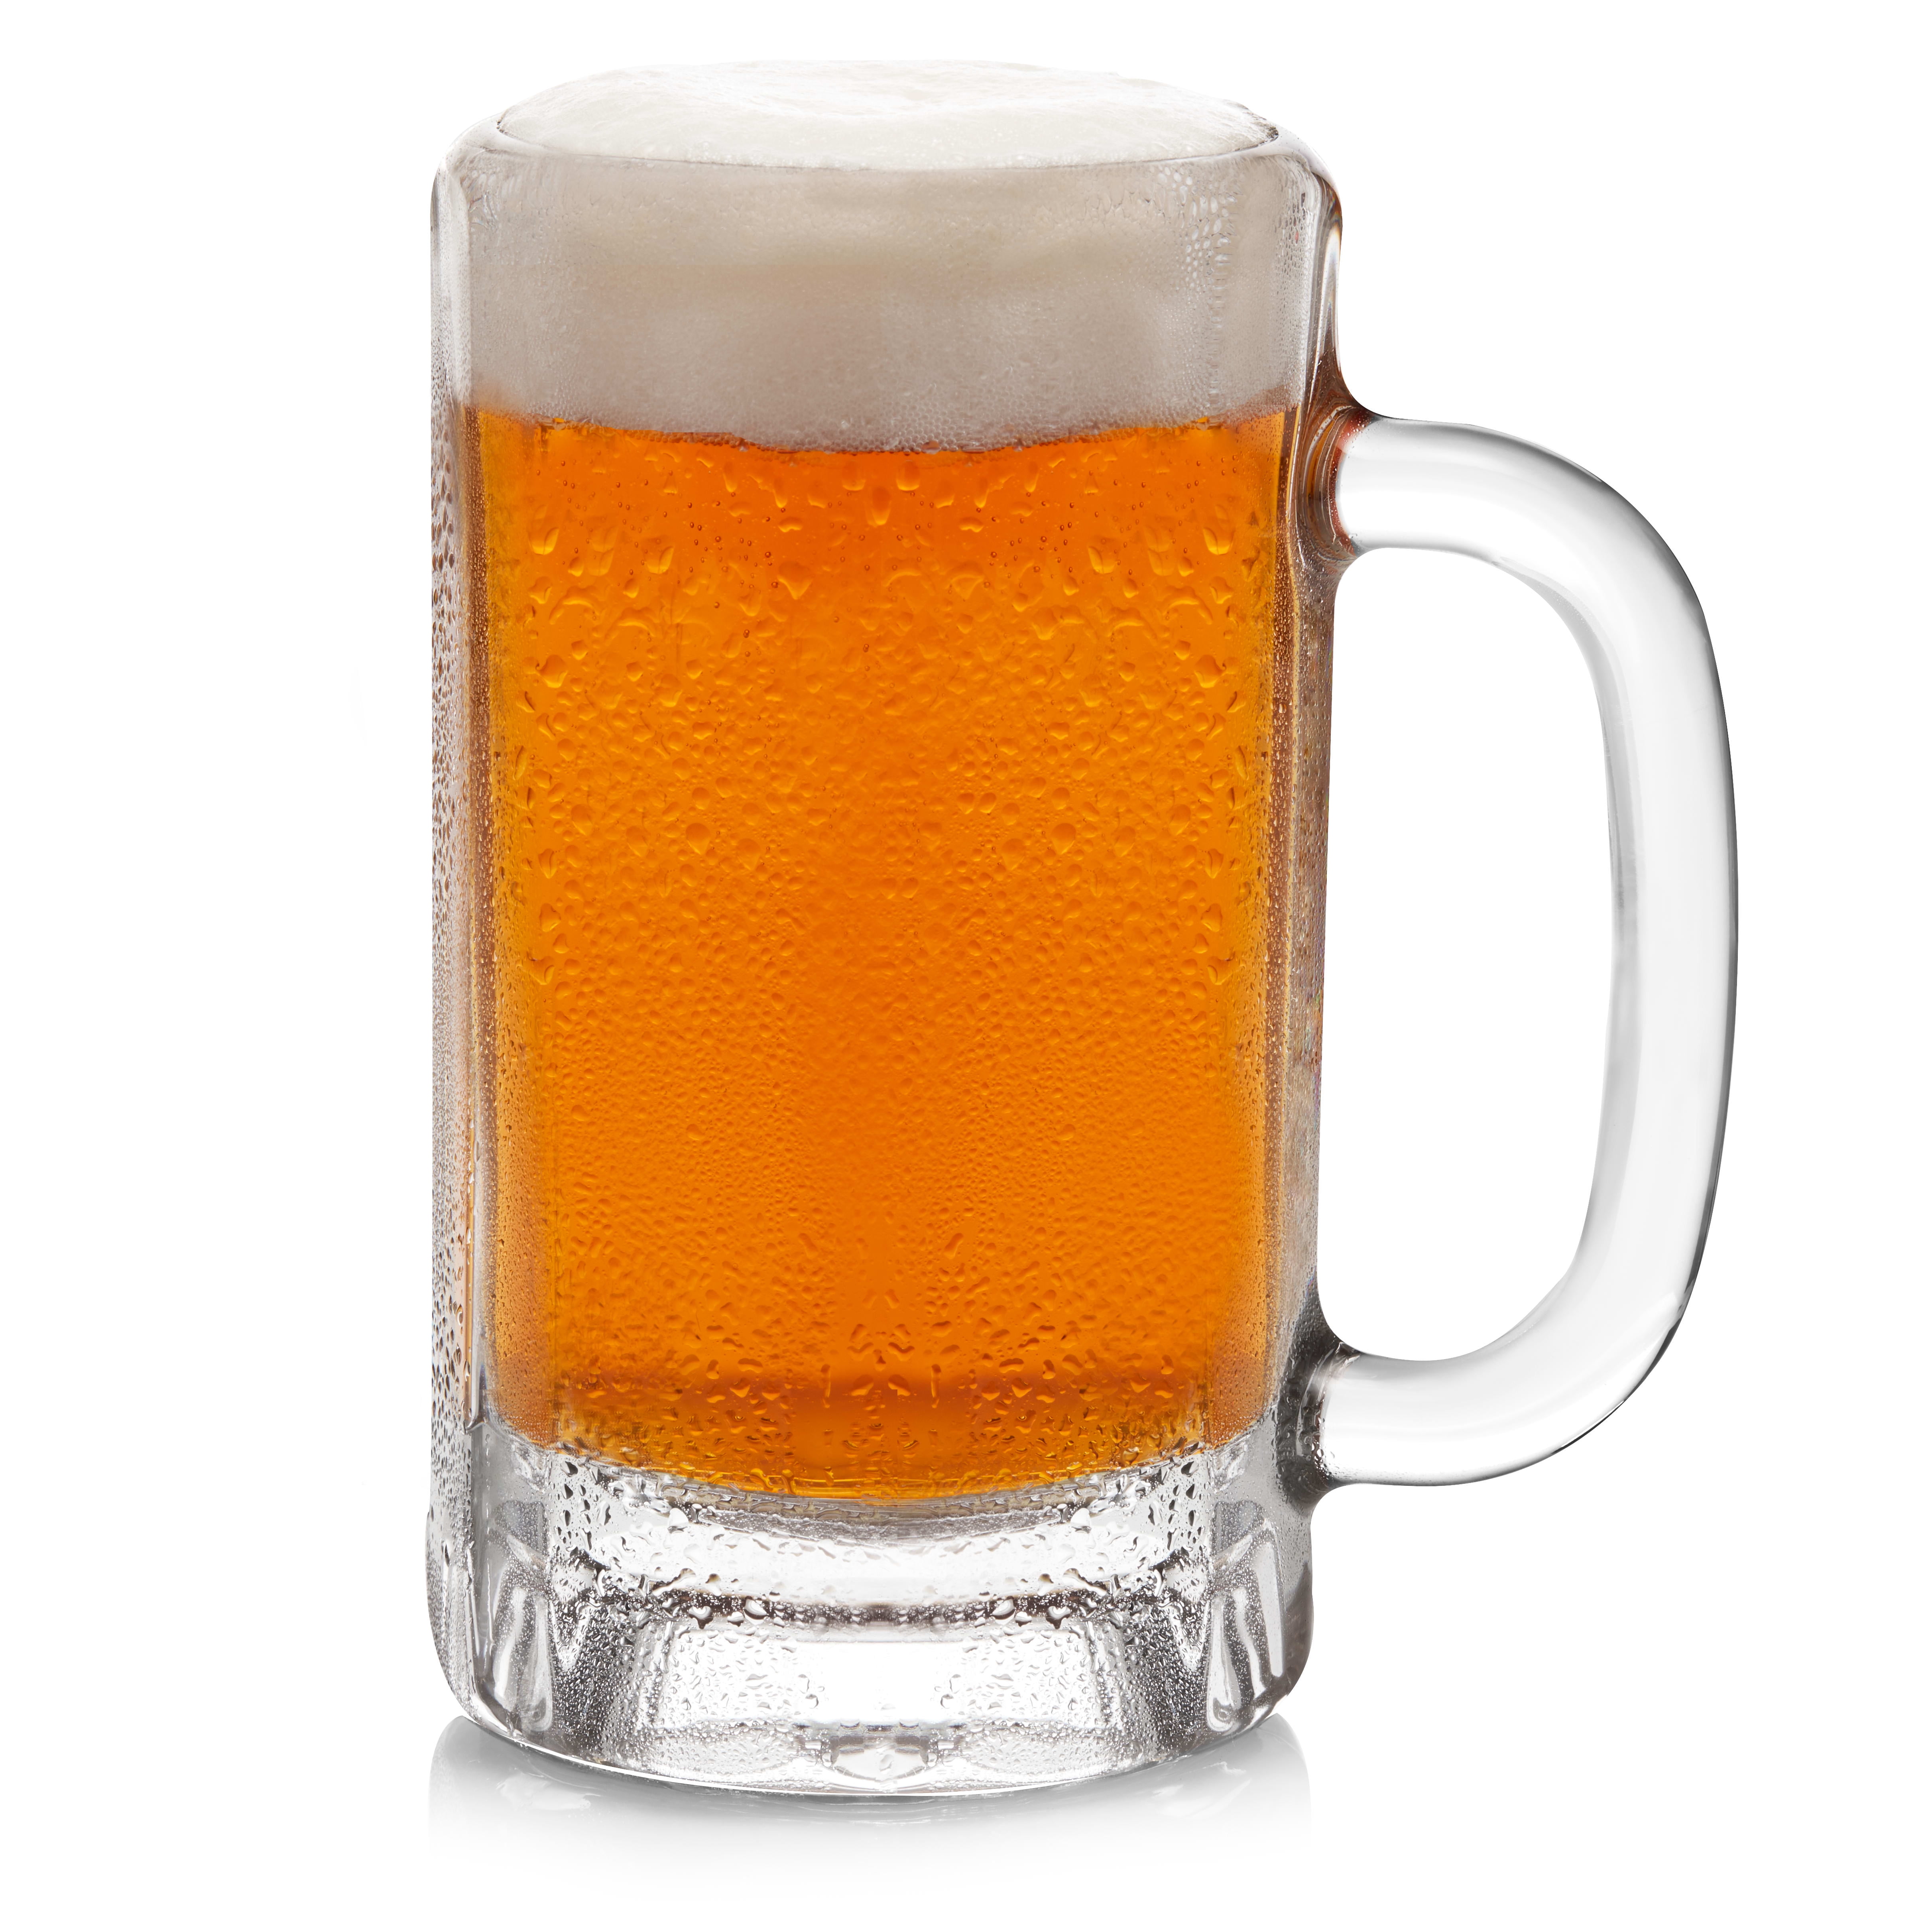 Amlong Crystal Lead Free Beer Mug 16 oz Set of 2